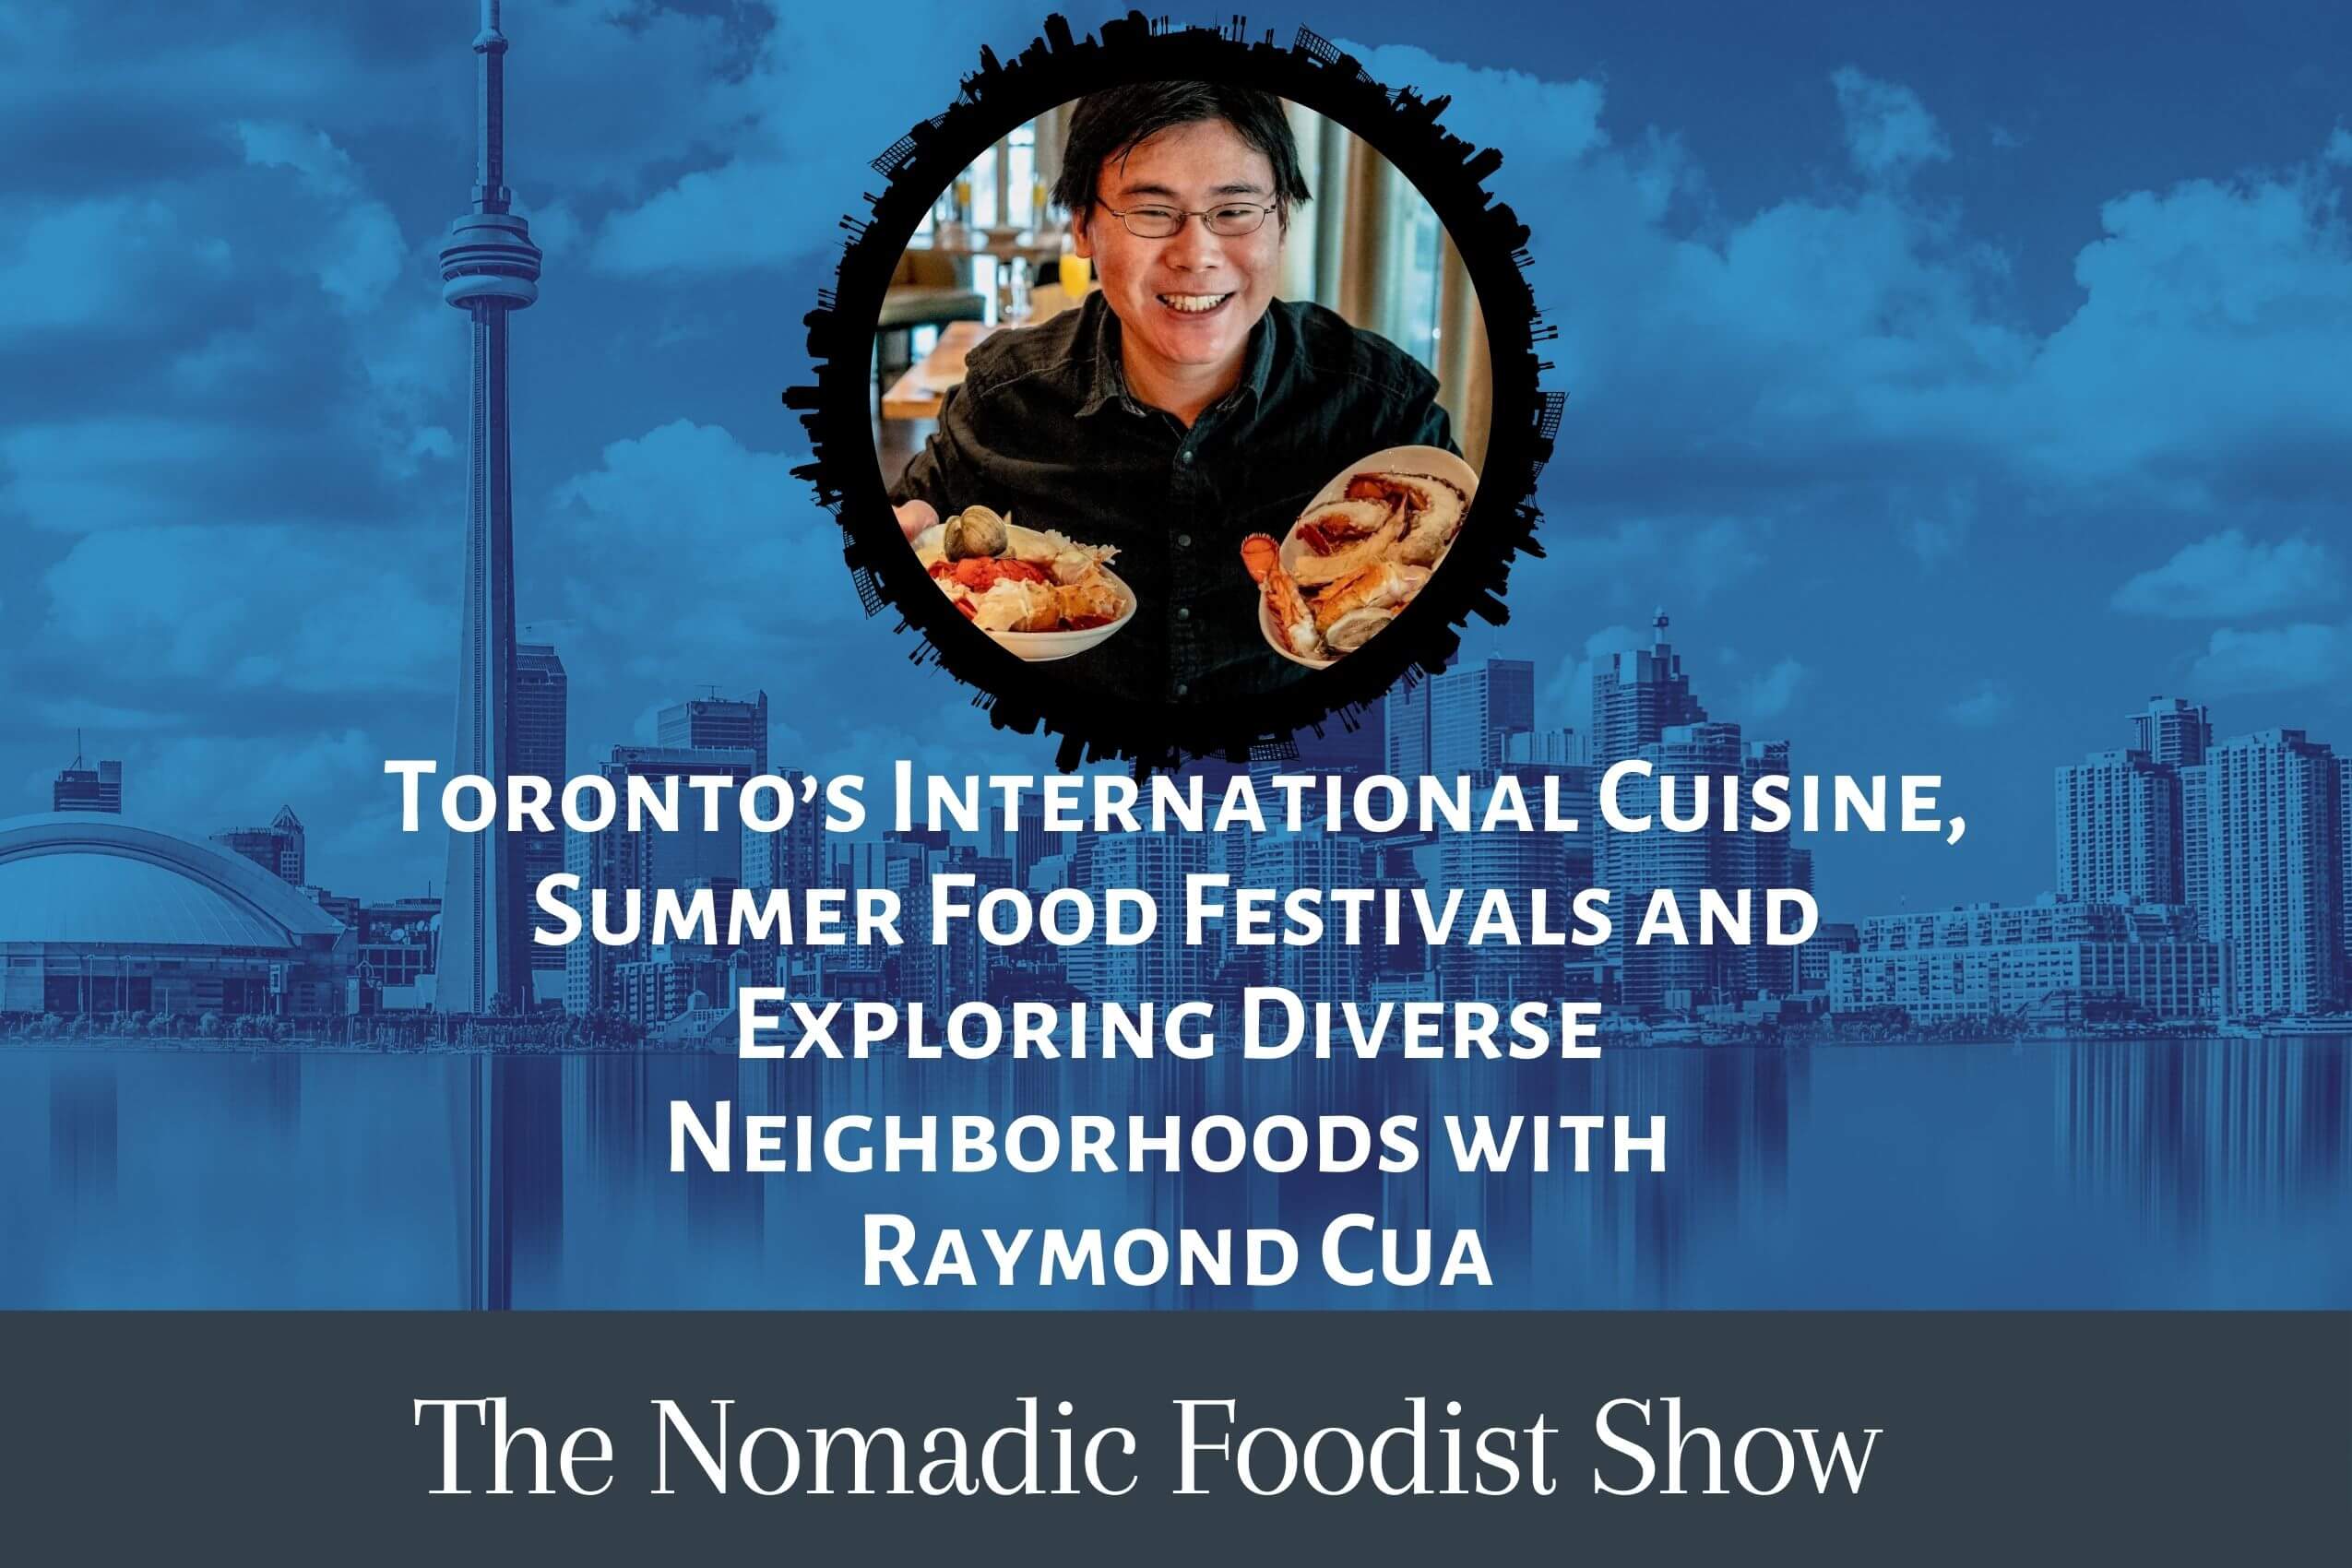 Raymond Cua Interviewed on The Nomadic Foodist Show about Toronto